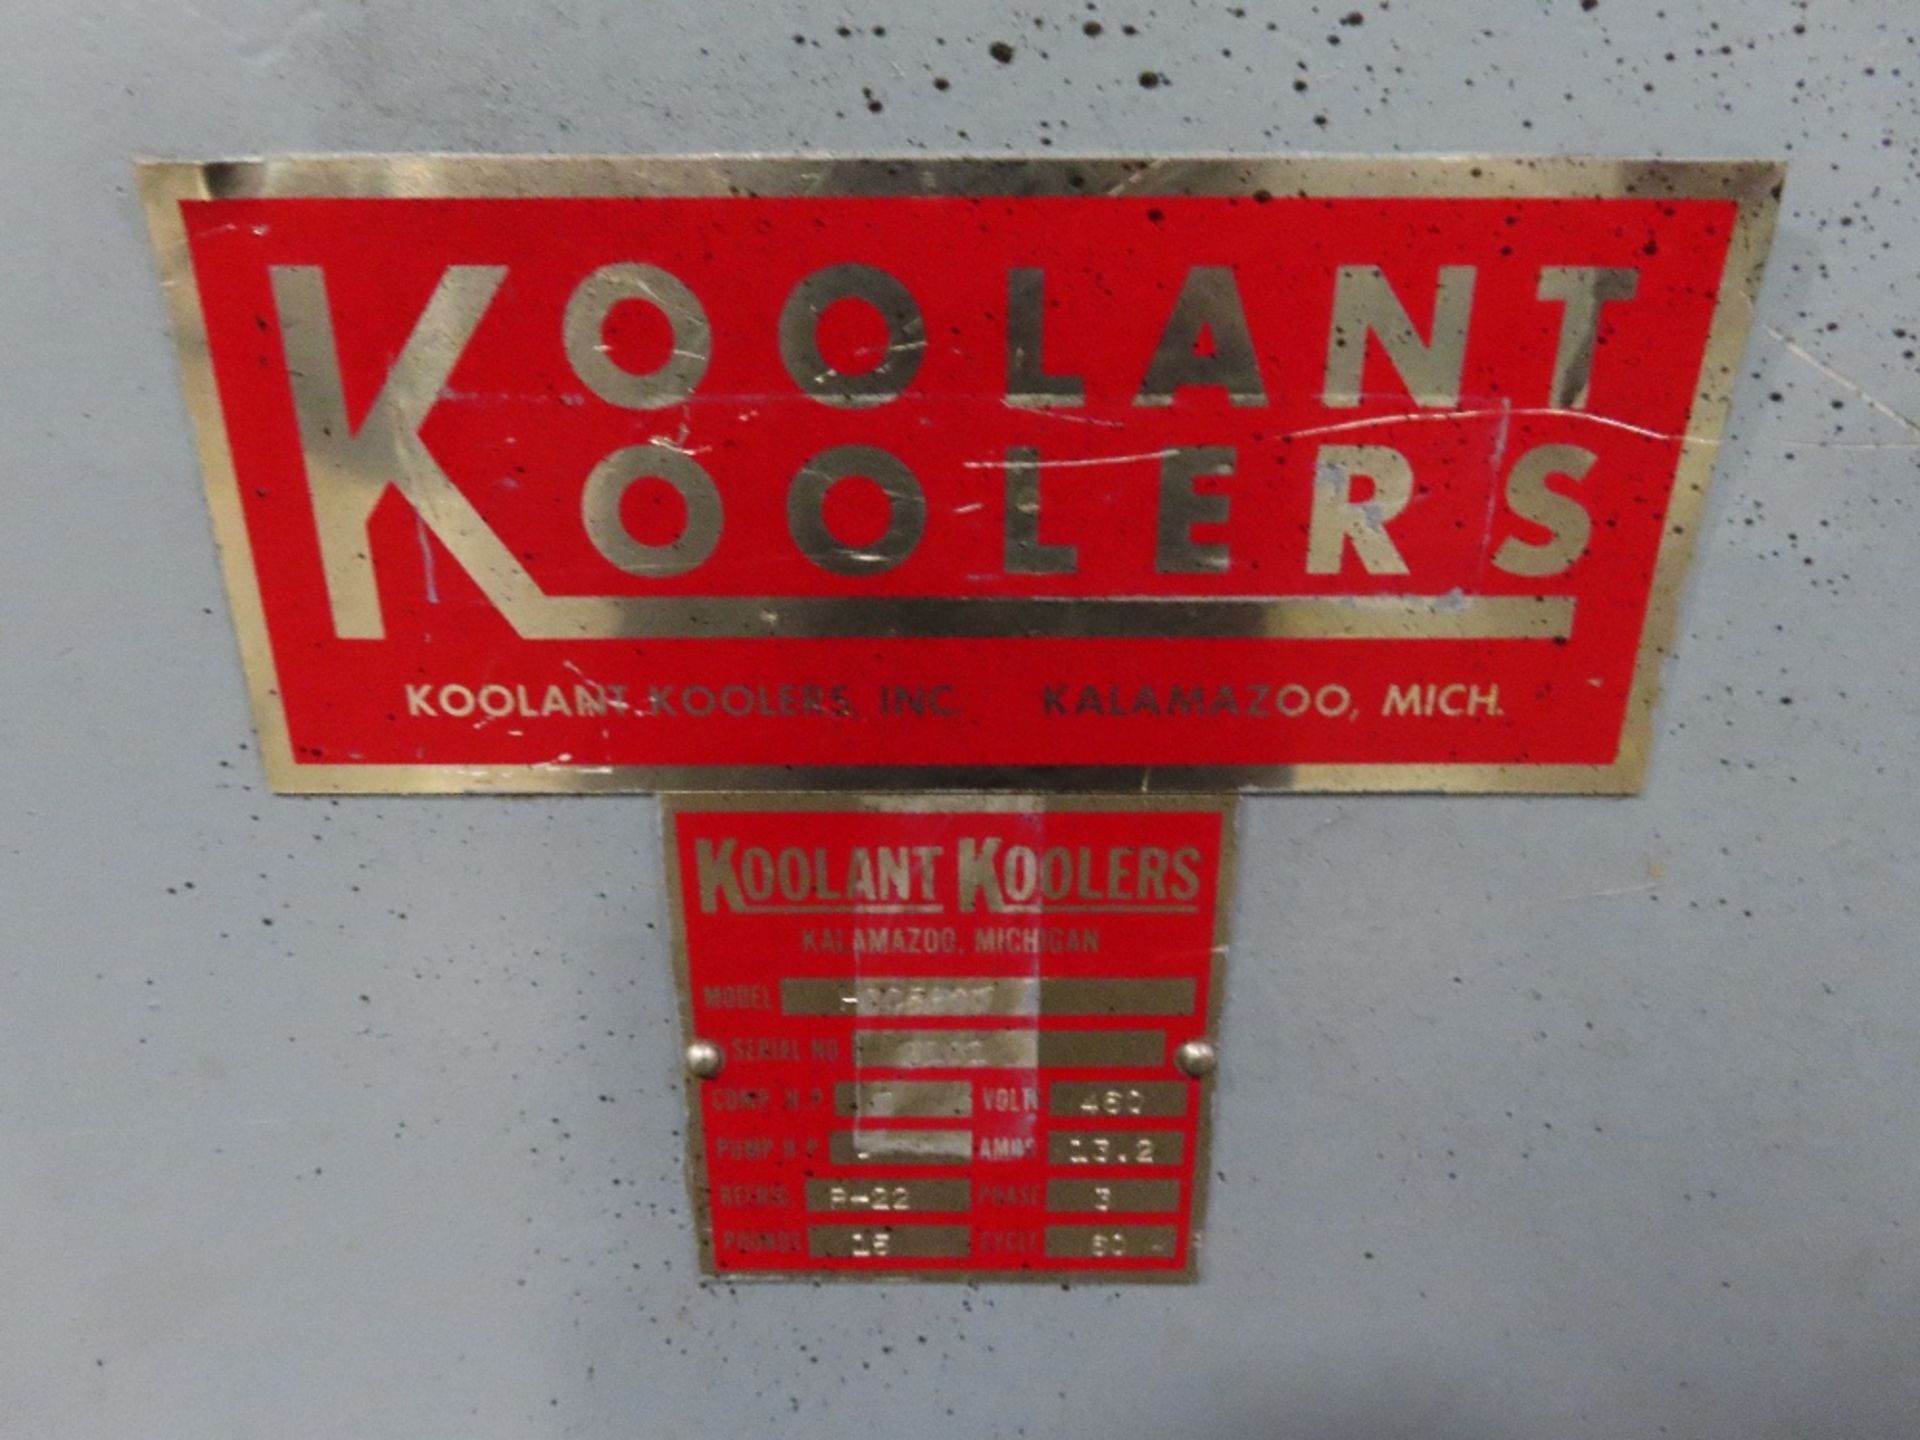 Koolant Koolers mod. HGC5000 Cooling Unit - Image 2 of 2